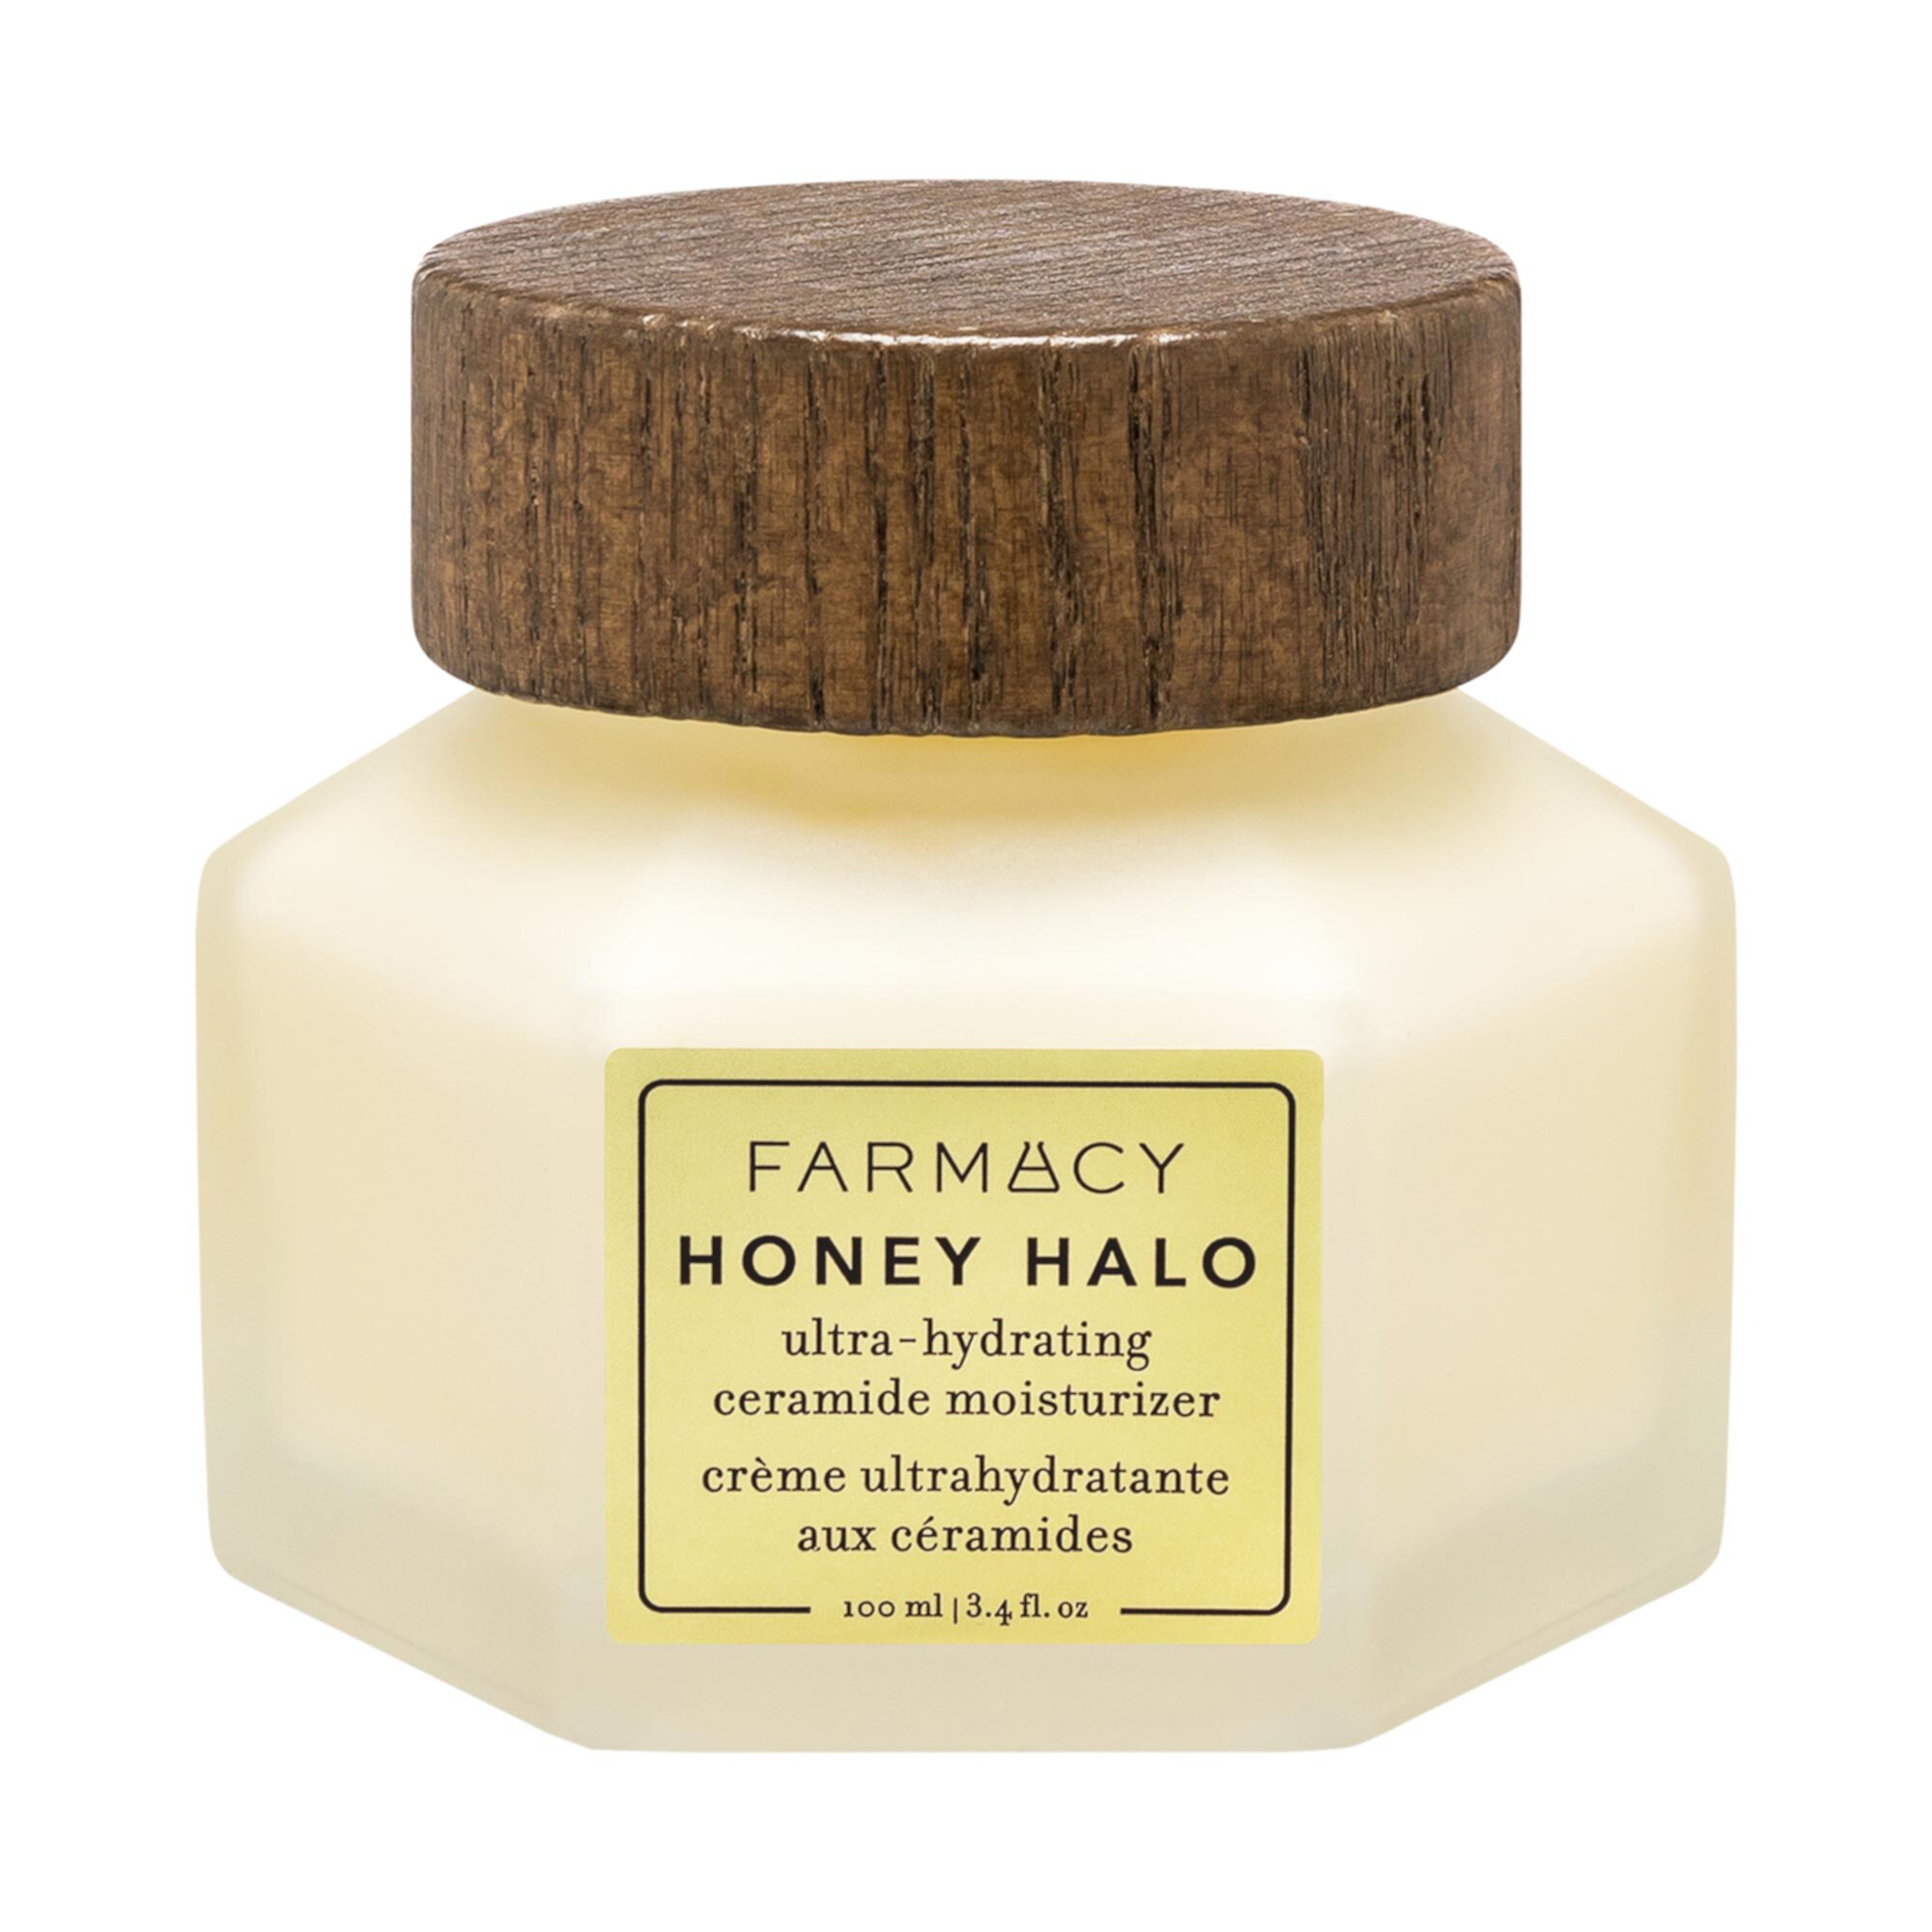 Увлажняющий крем Honey Halo Jumbo Farmacy